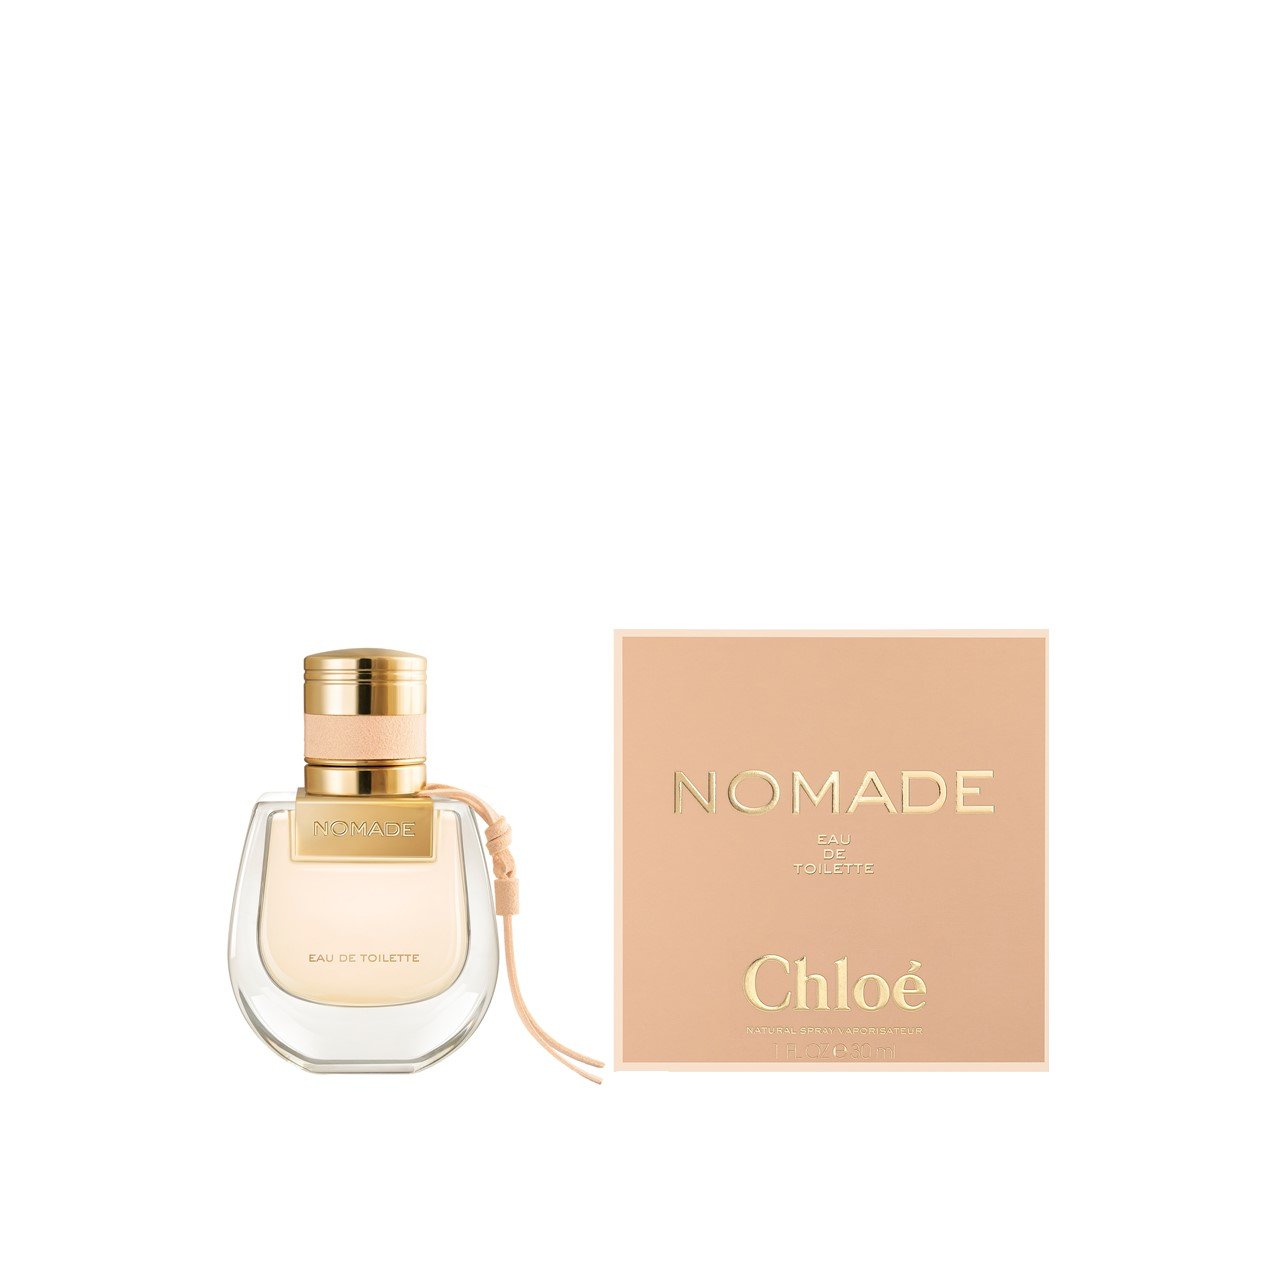  Chloe Nomade Eau De Parfum Natural Spray Vaporisateur